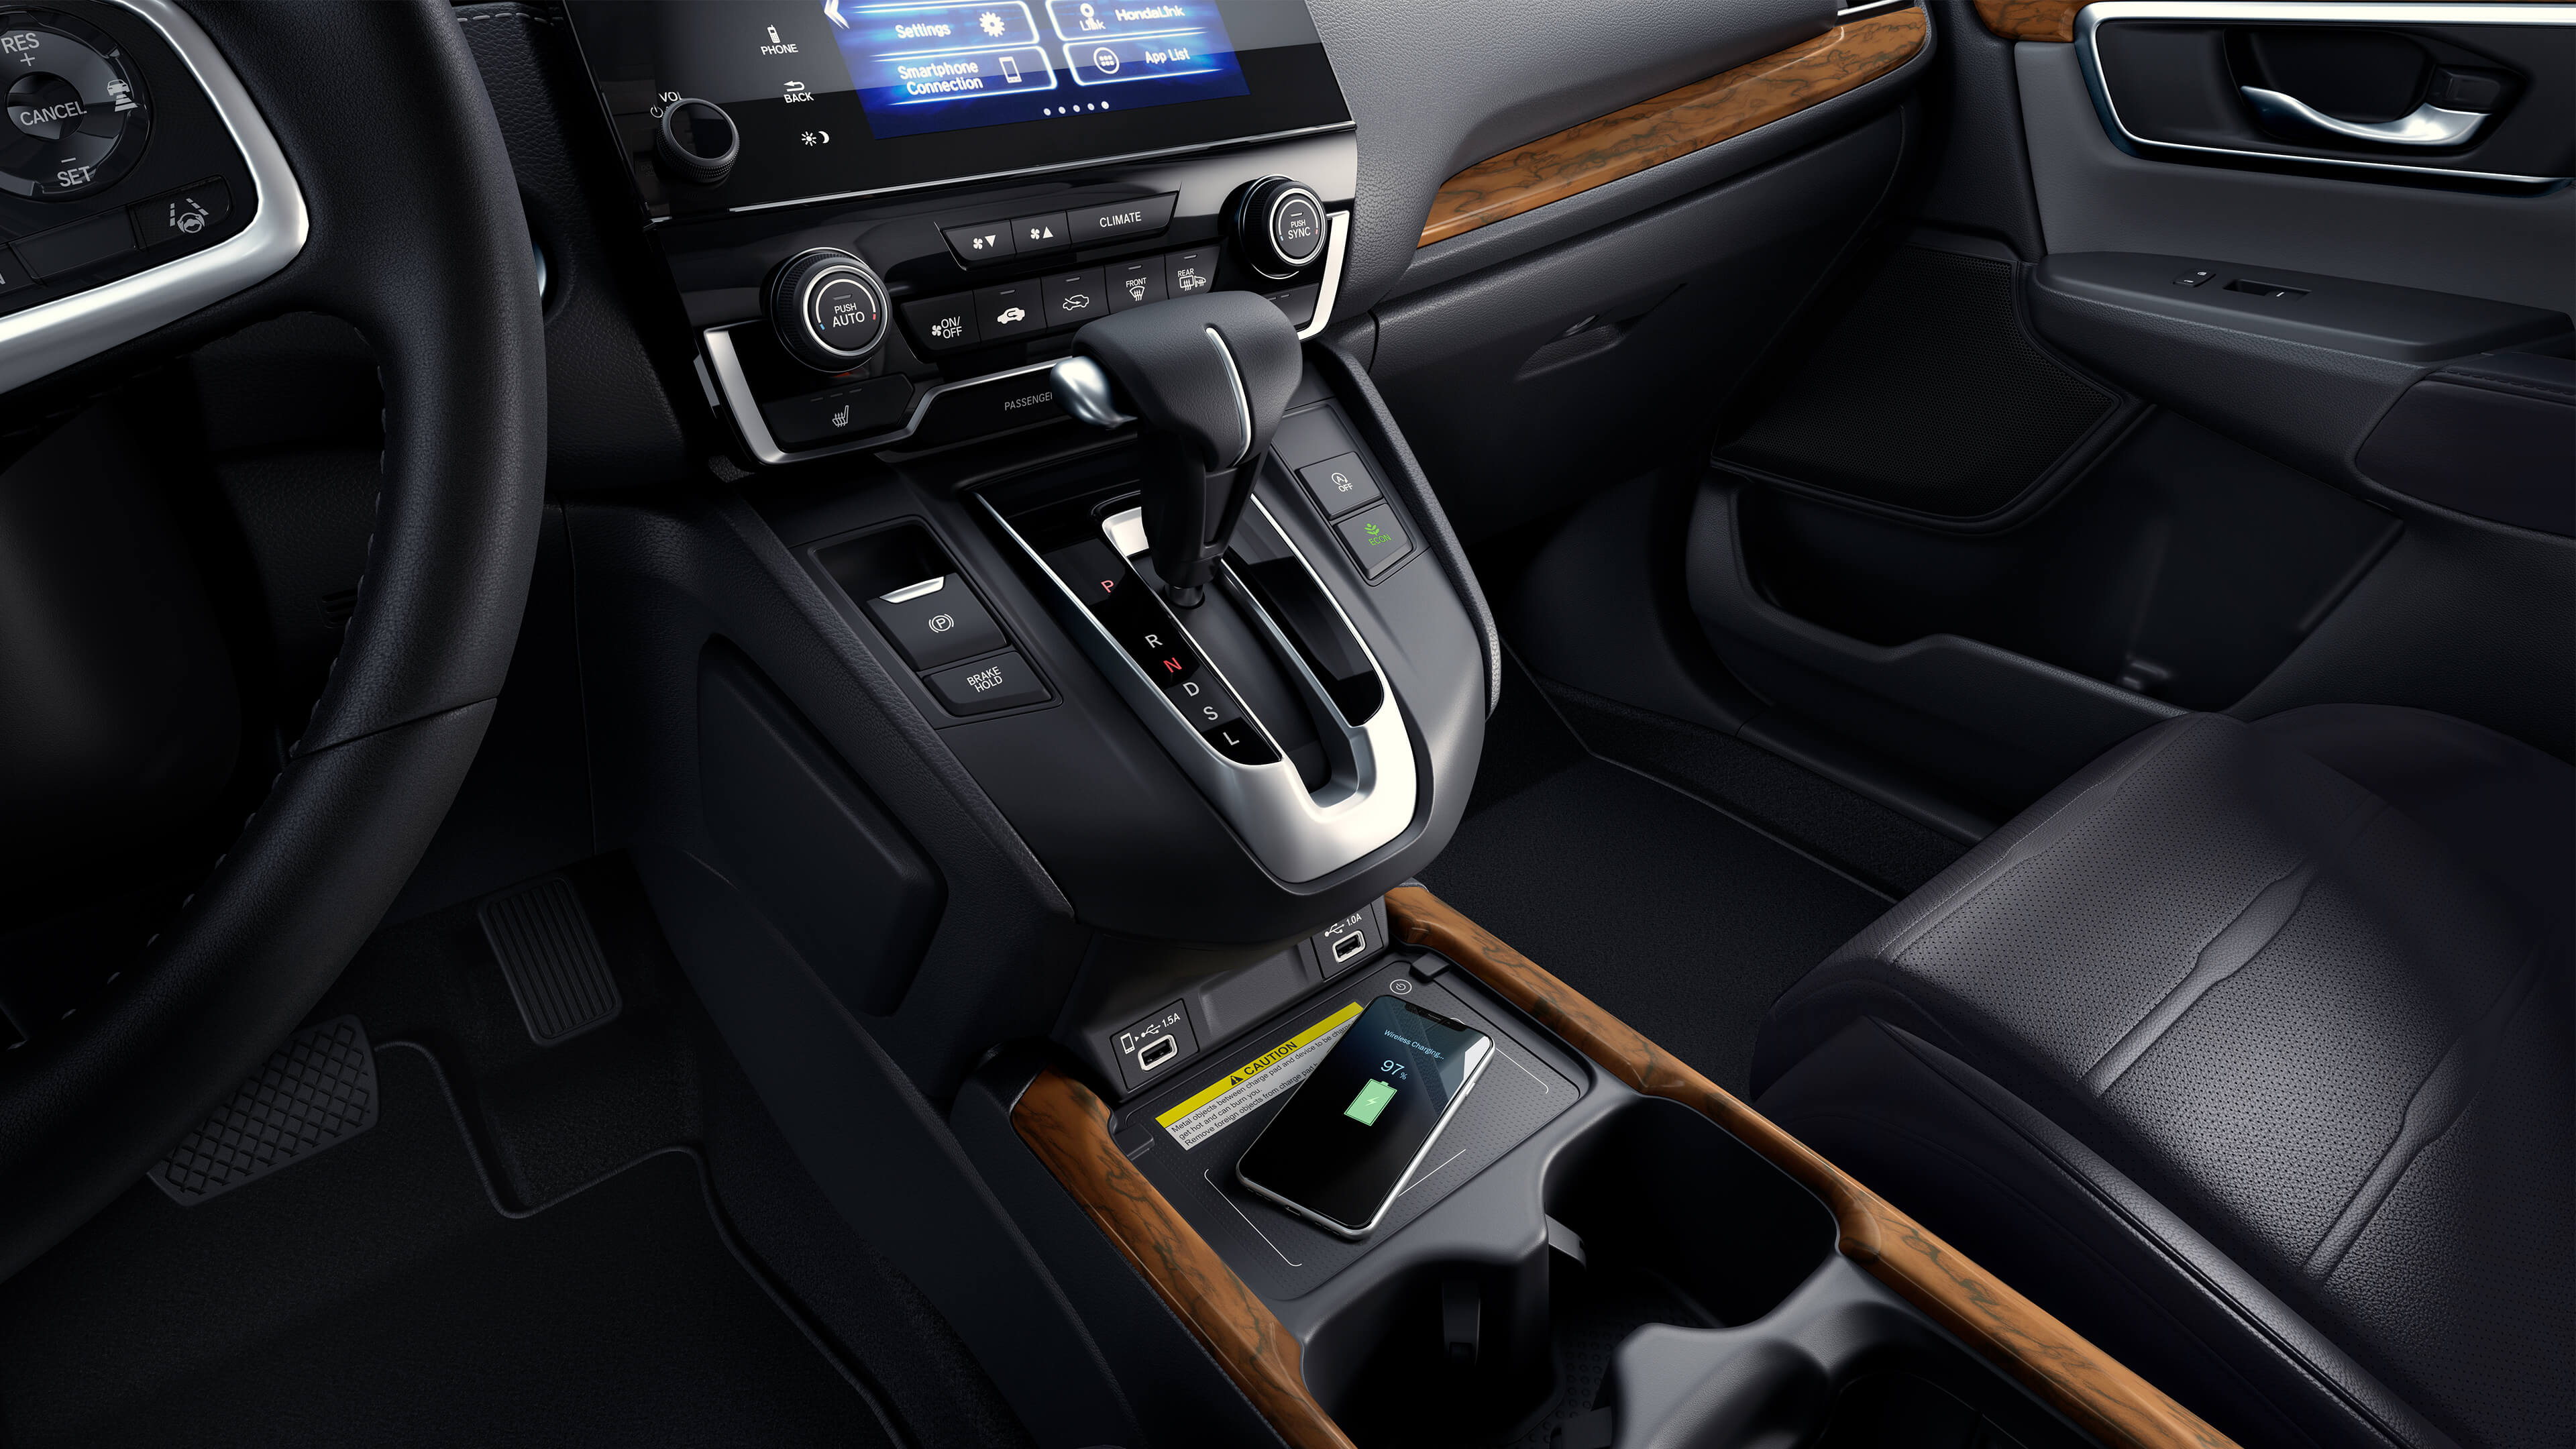 CVT shifter detail in the 2021 Honda CR-V Touring interior.